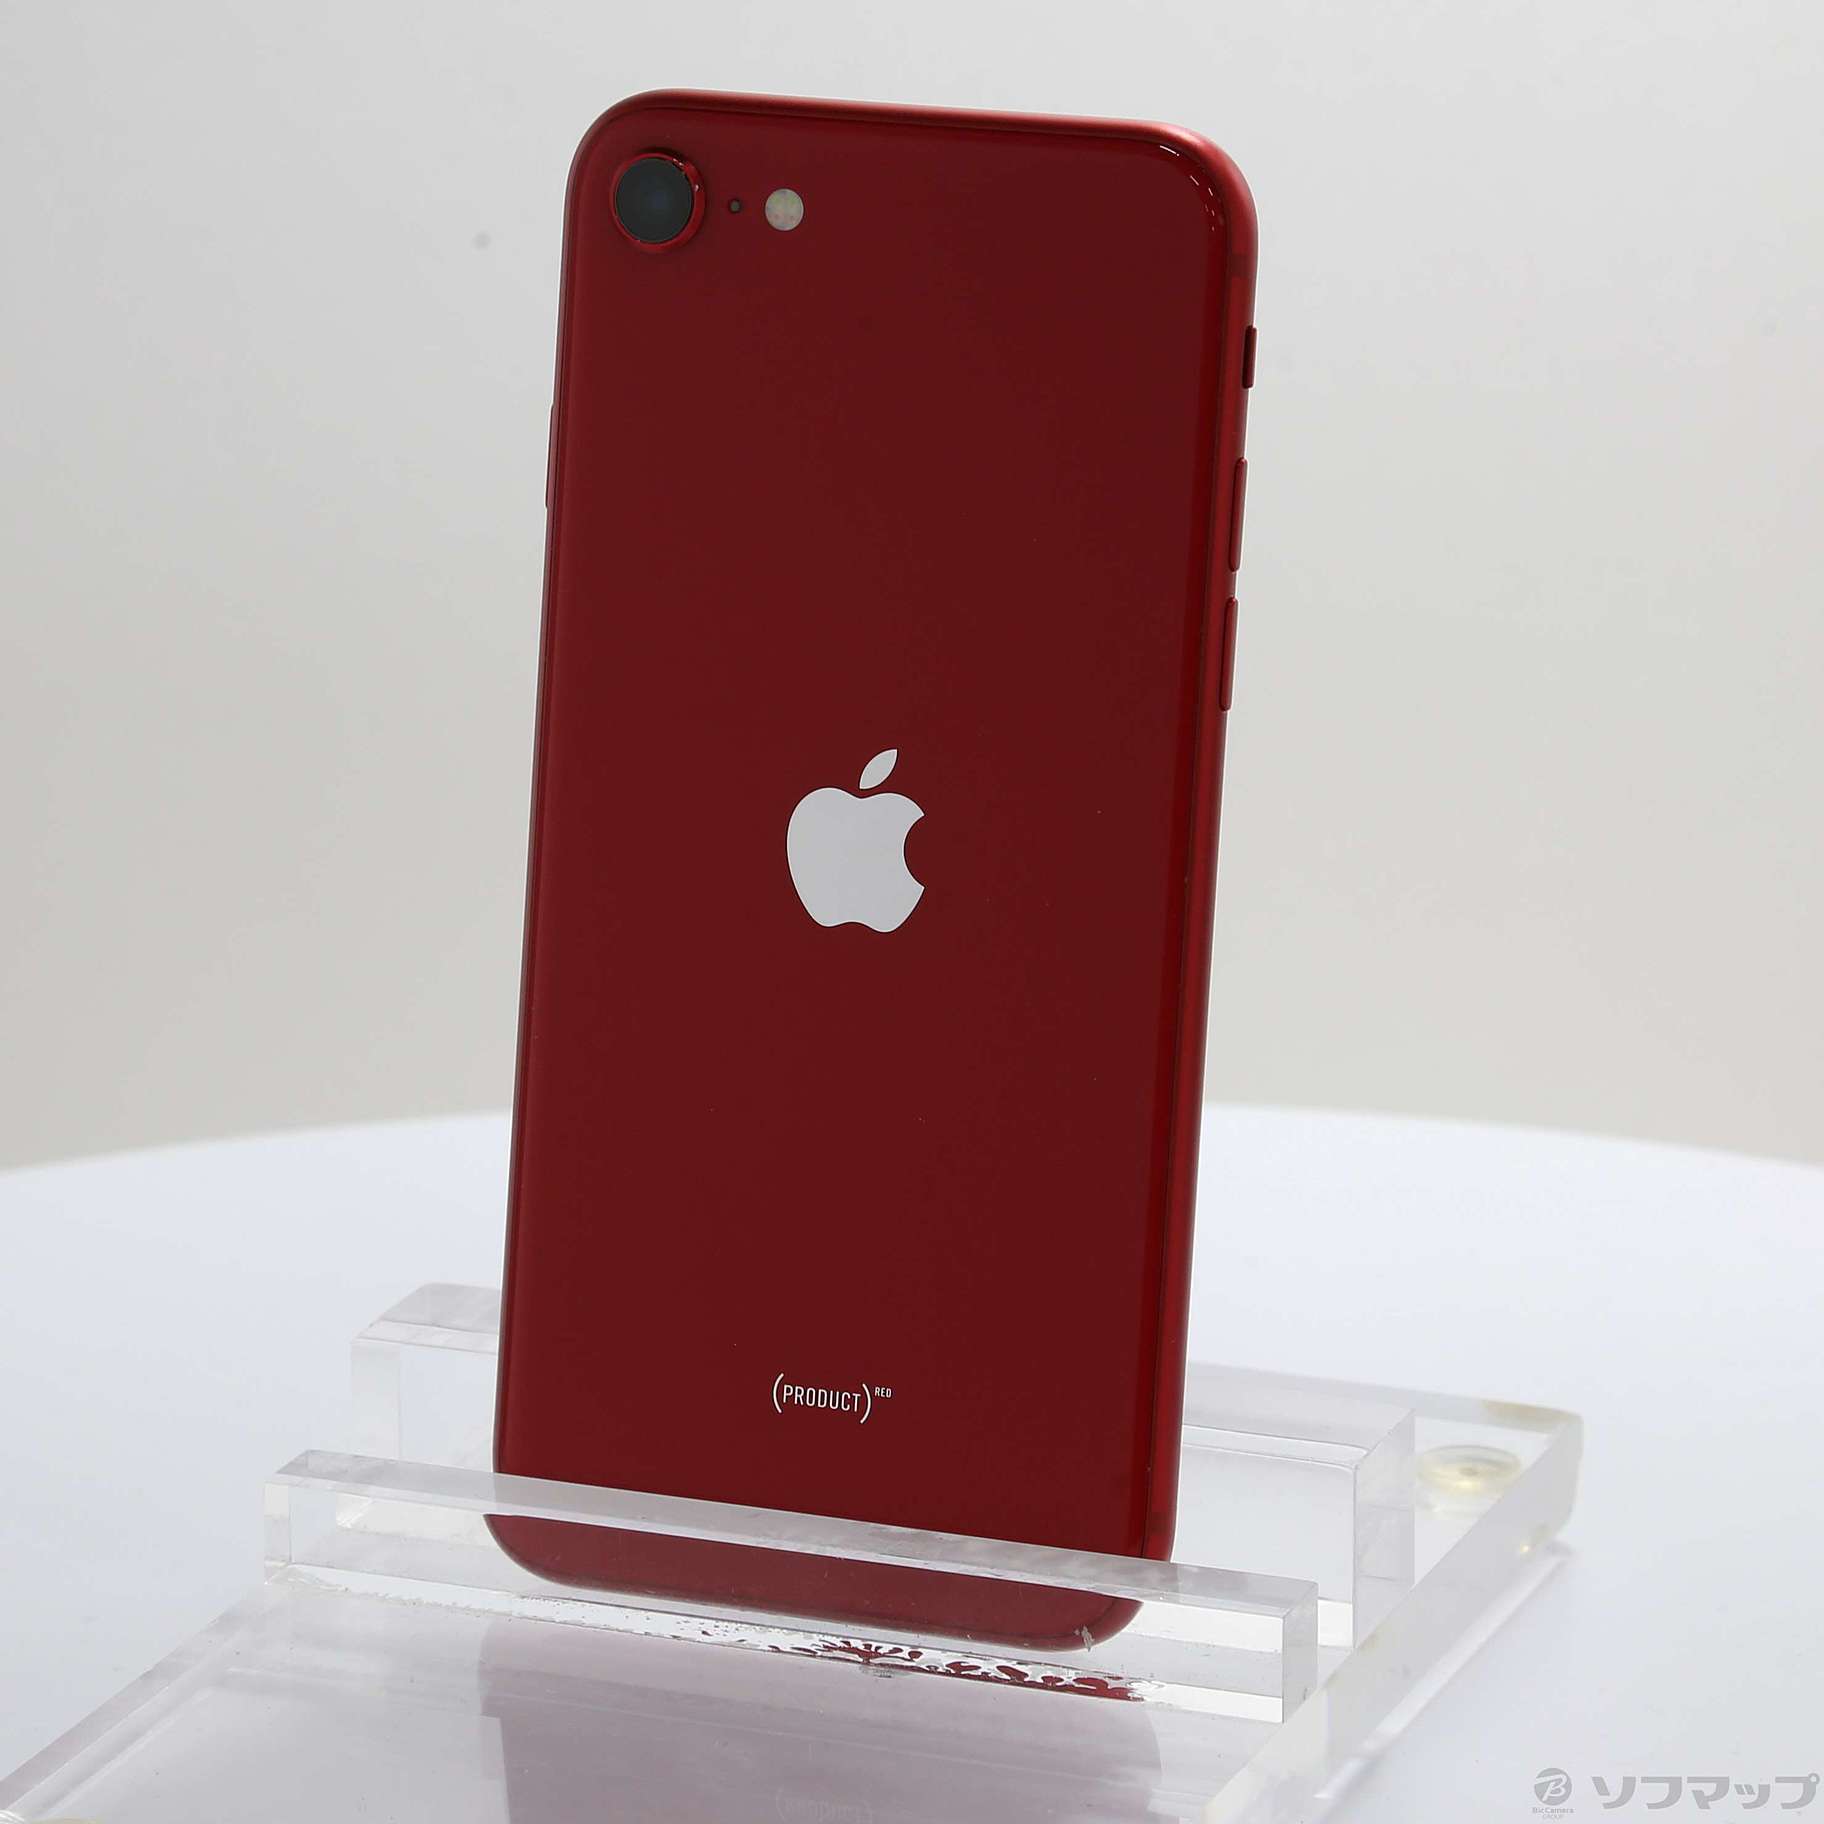 iPhone SE (第2世代) (PRODUCT)RED 128GB SIMフリー [レッド] 中古(白